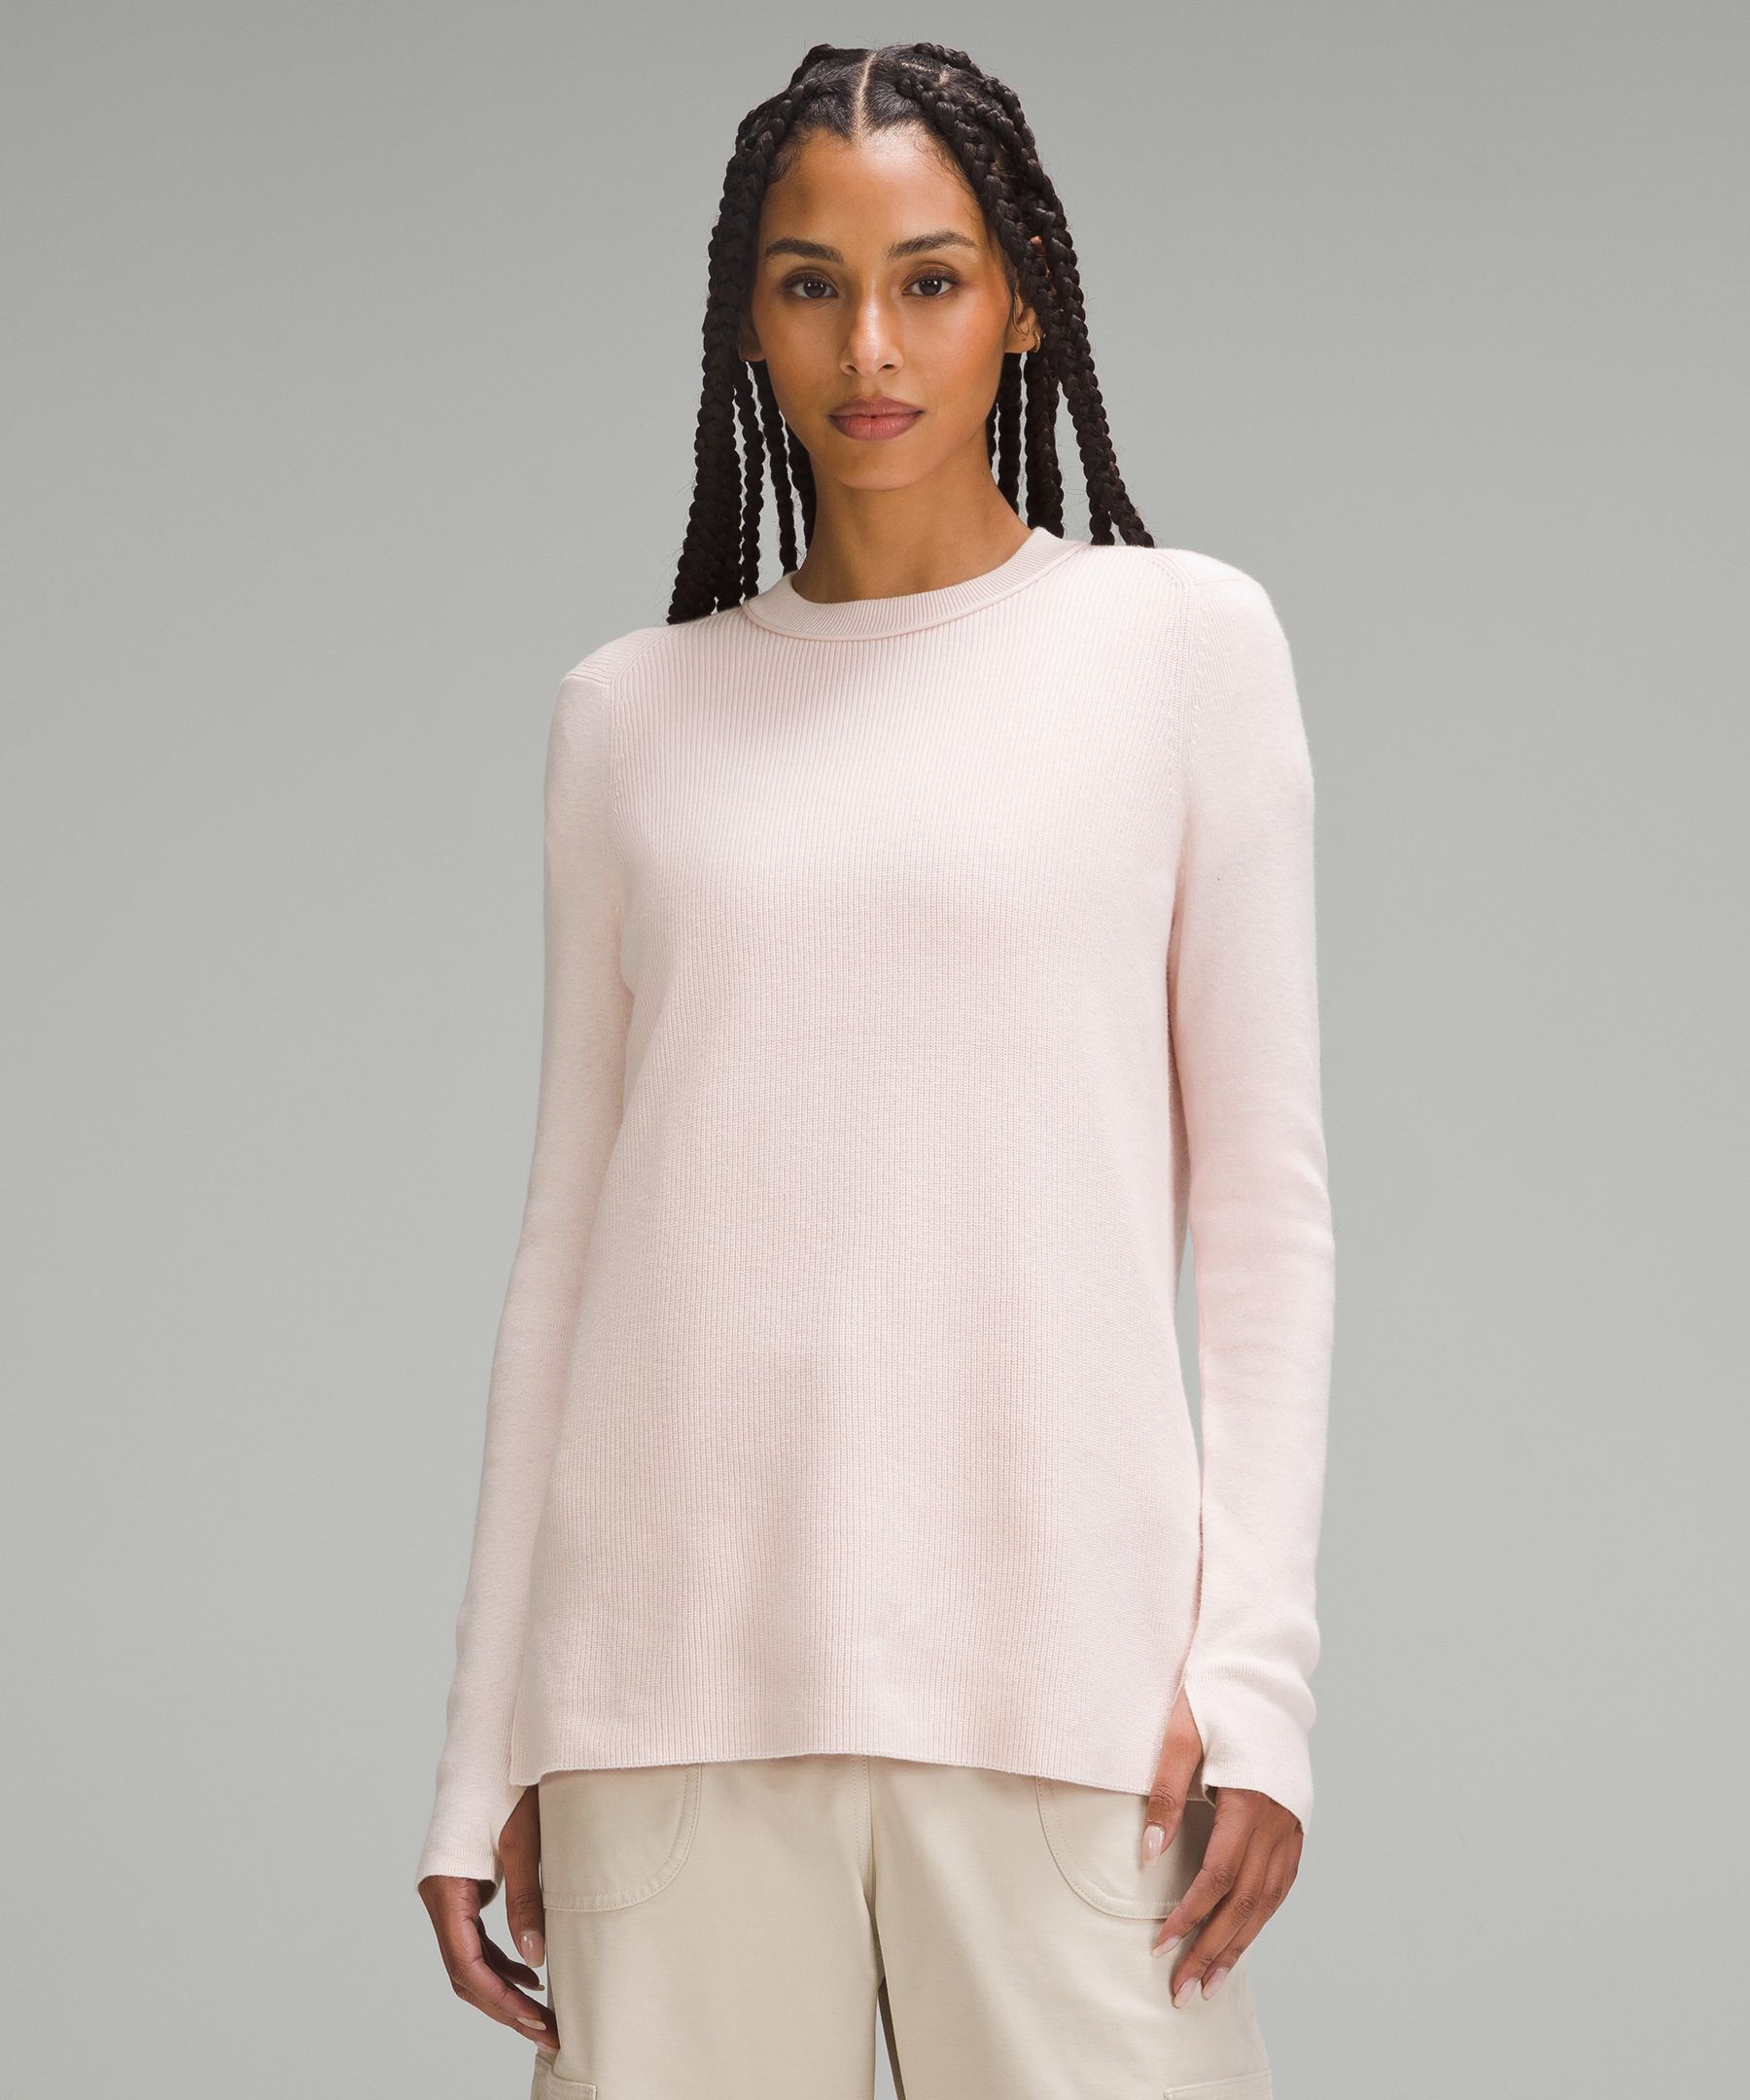 Lululemon Take It All In Cotton-blend Sweater